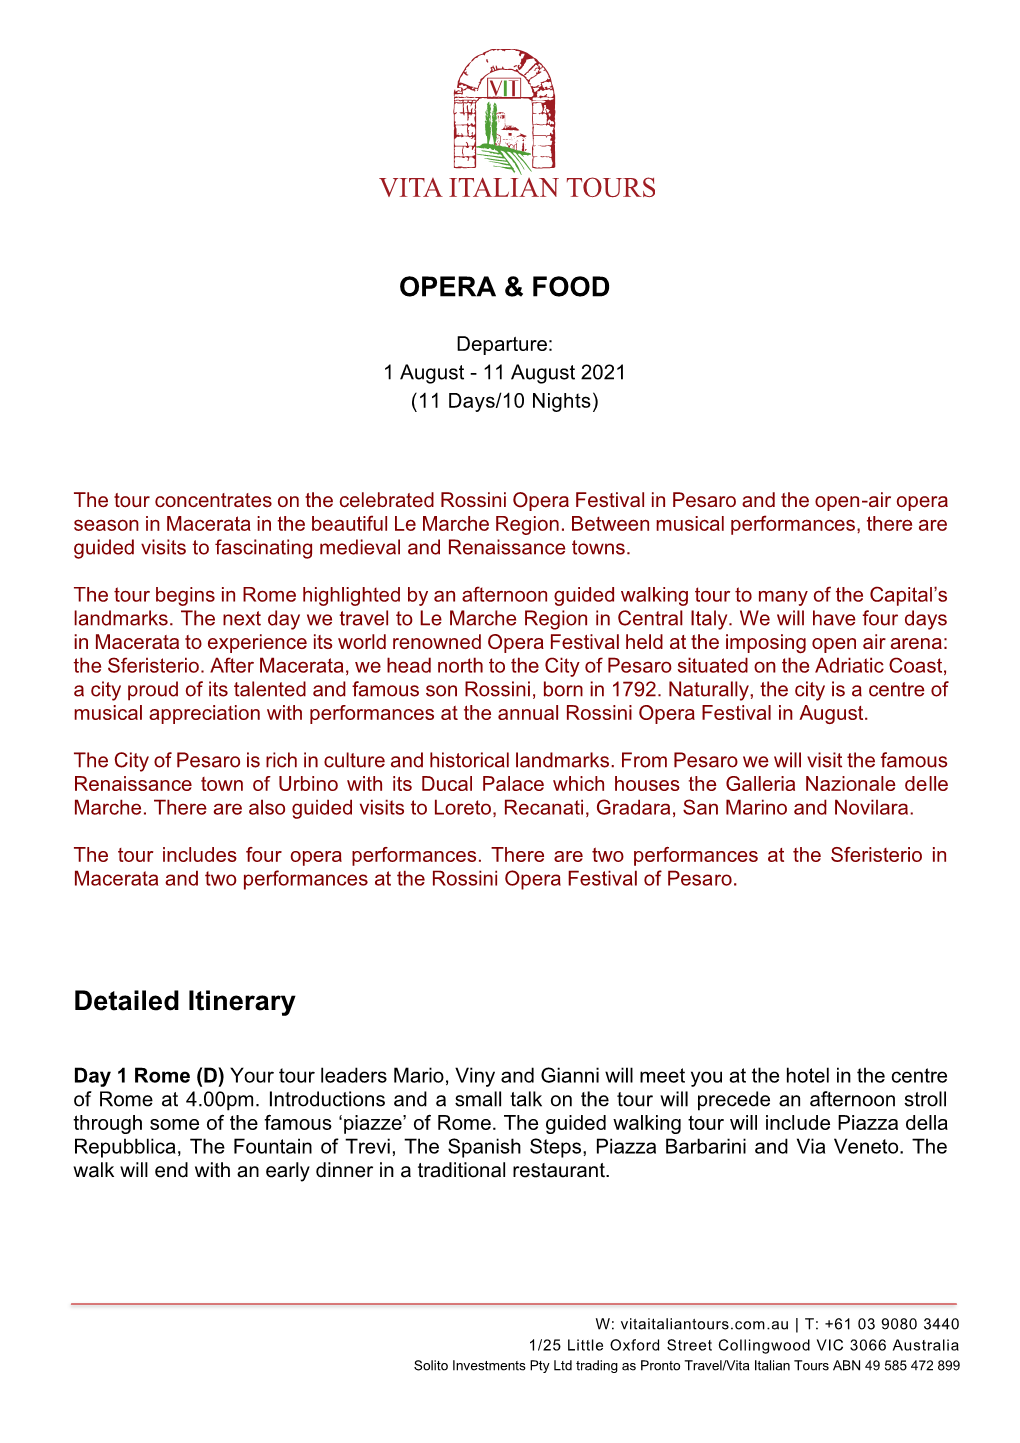 OPERA & FOOD Detailed Itinerary